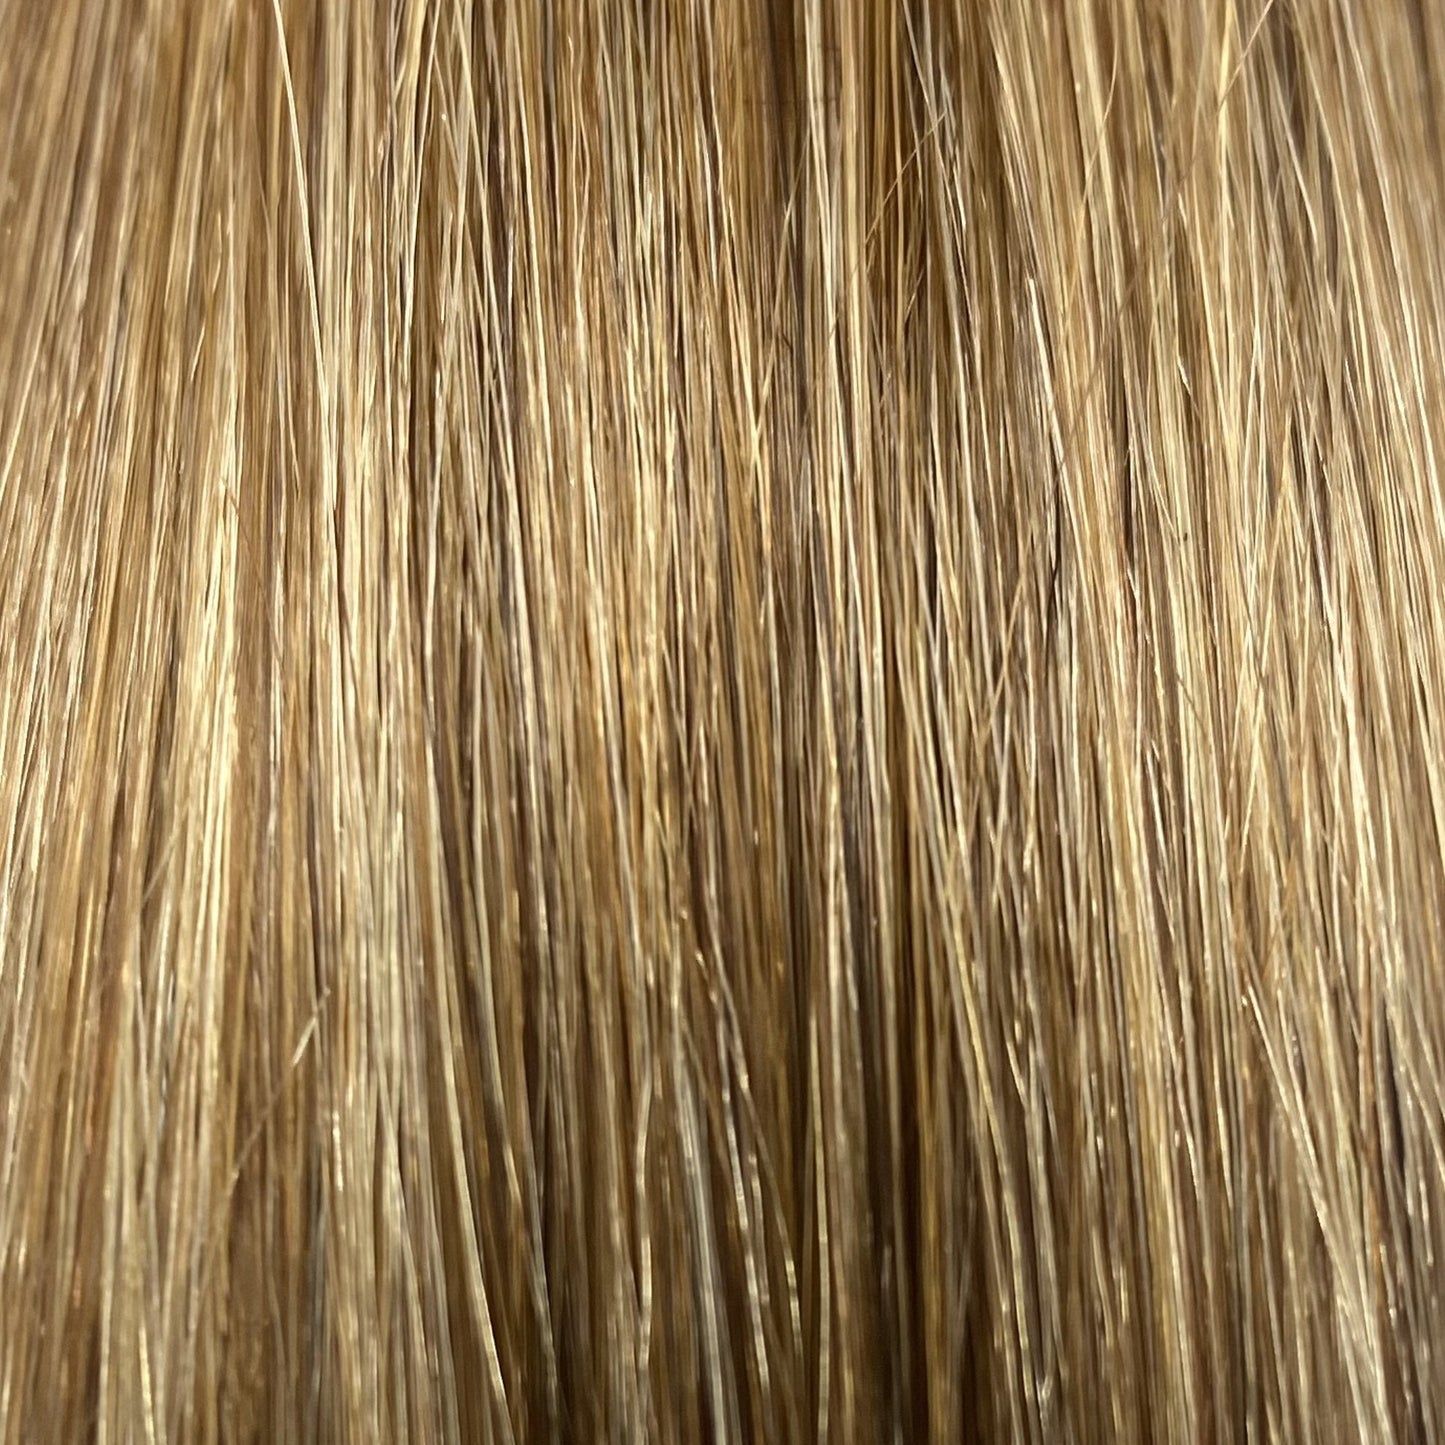 Fusion hair extensions #18/24 - 50cm/20 inches - Dark Blonde/Ash Blonde Highlight Fusion Euro So Cap 